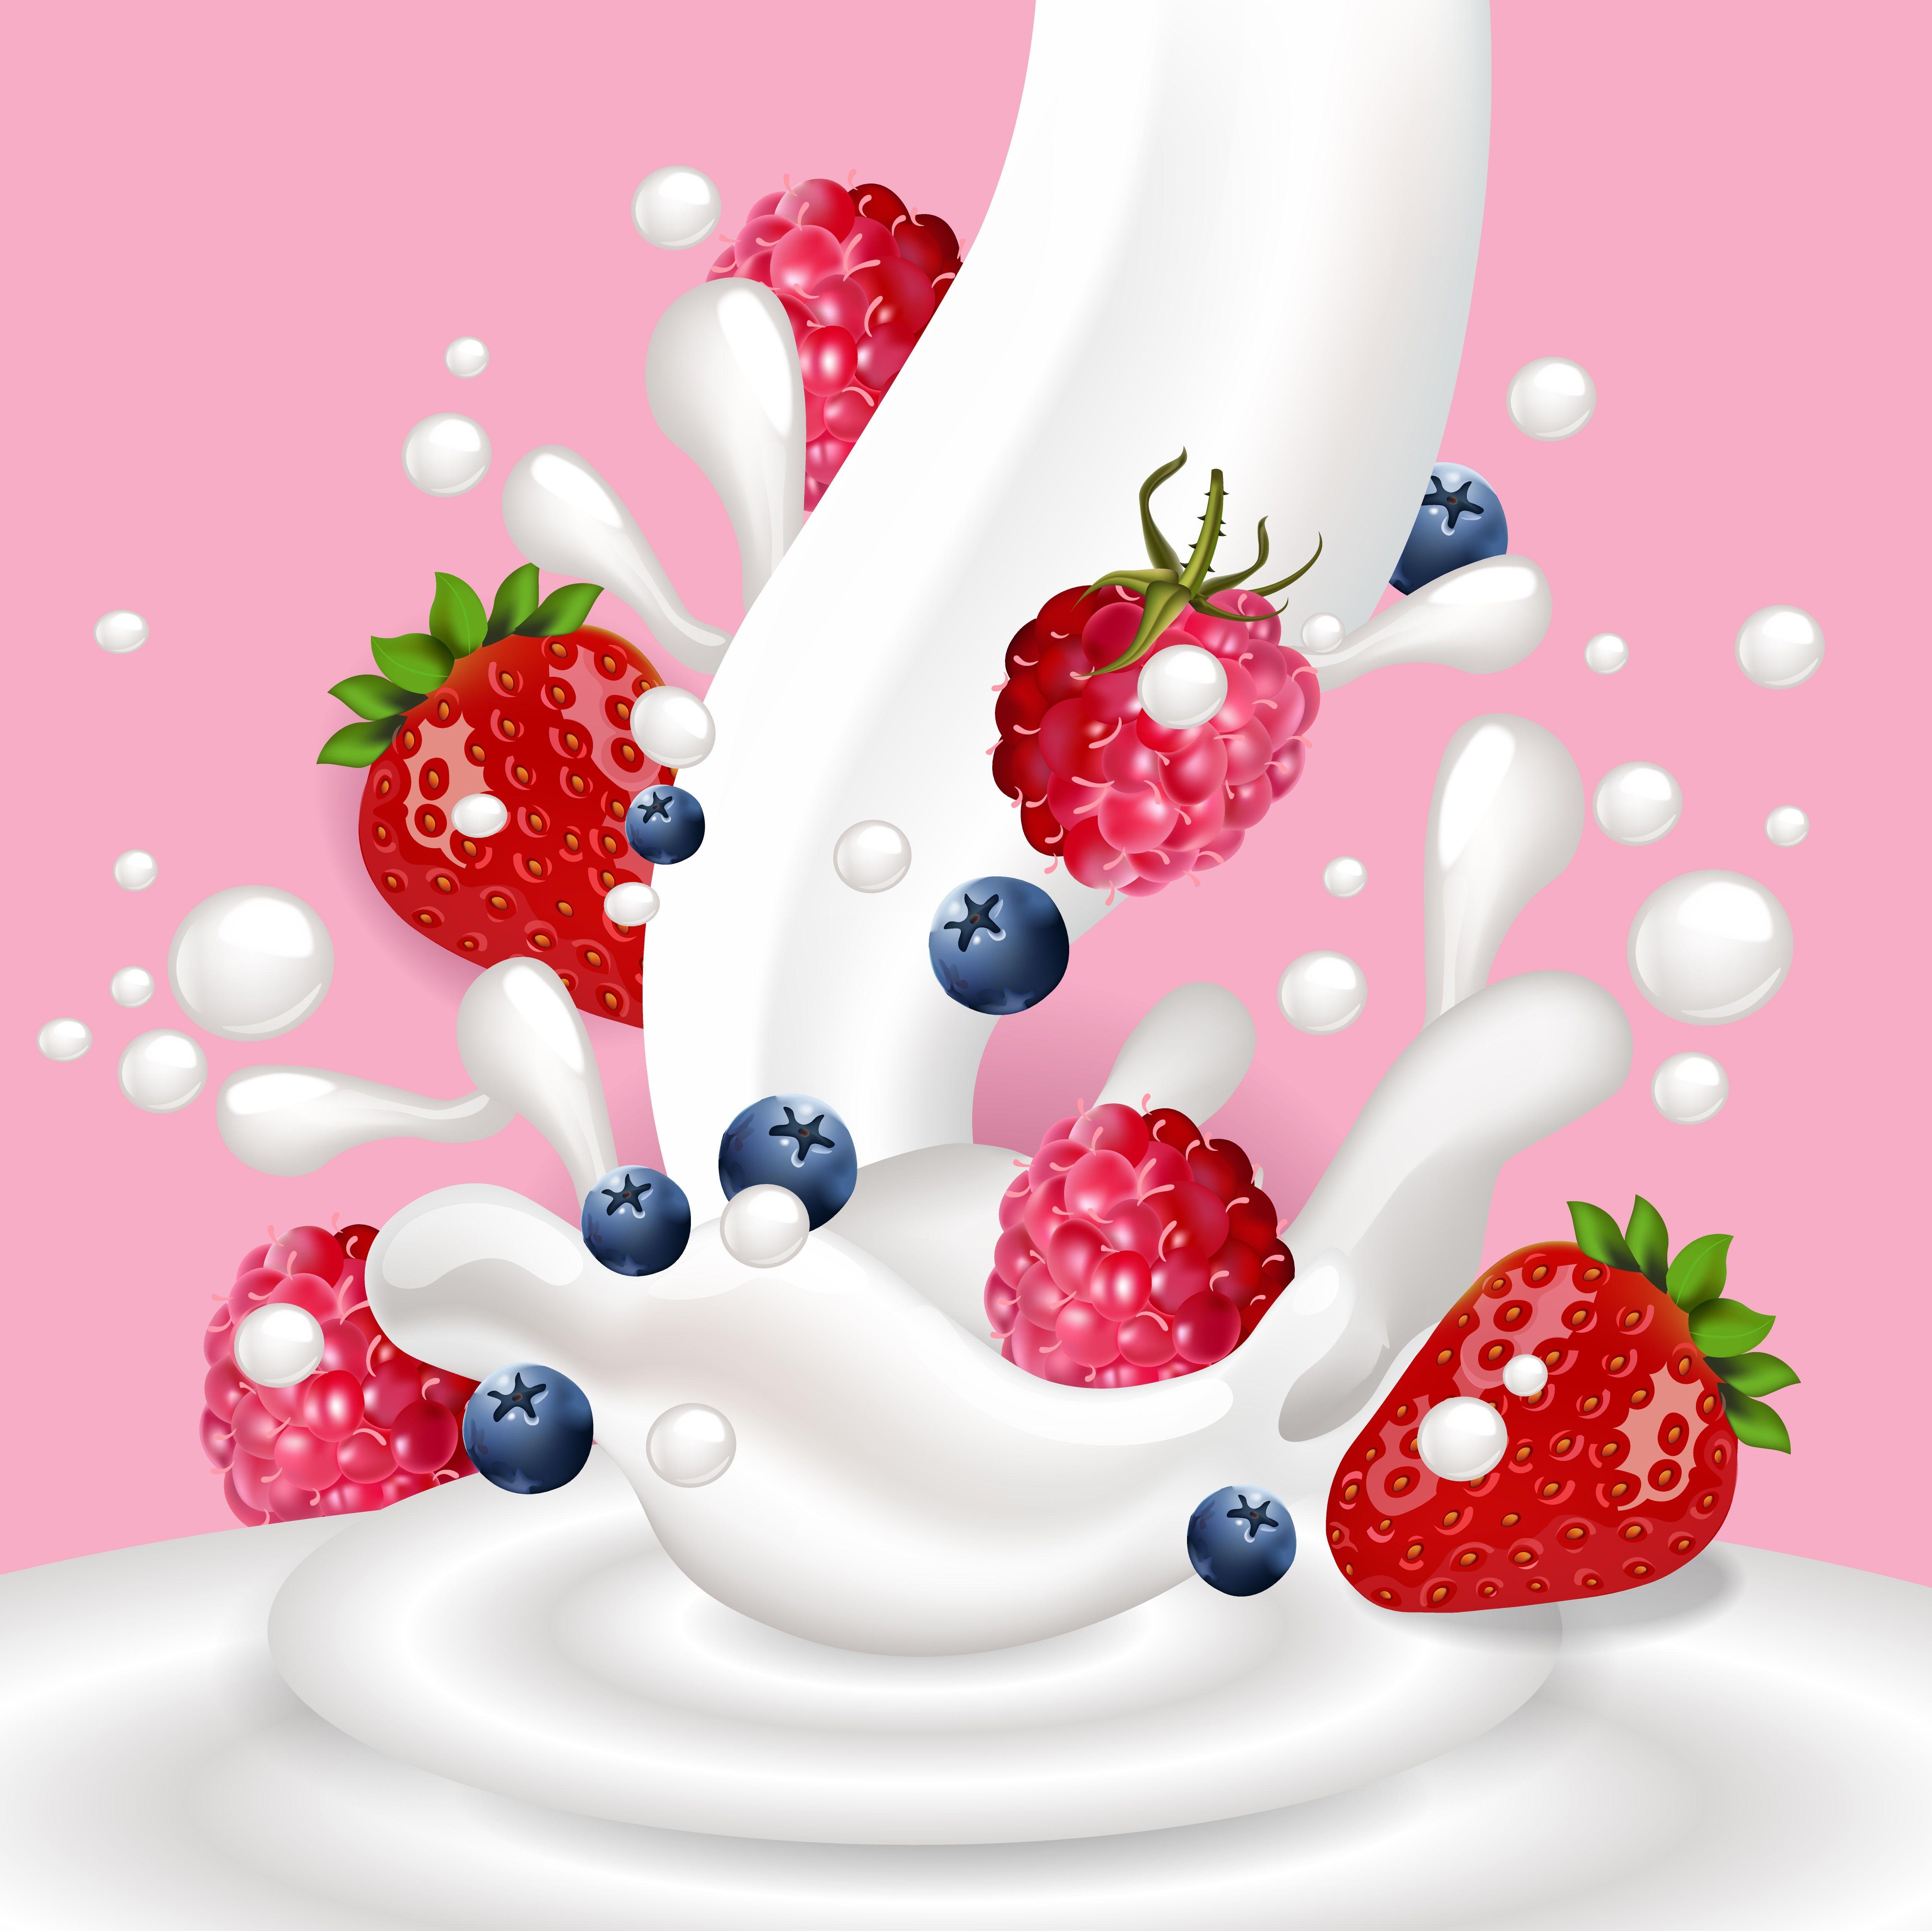 Wallpaper strawberry milk delicious 4k Food 15781